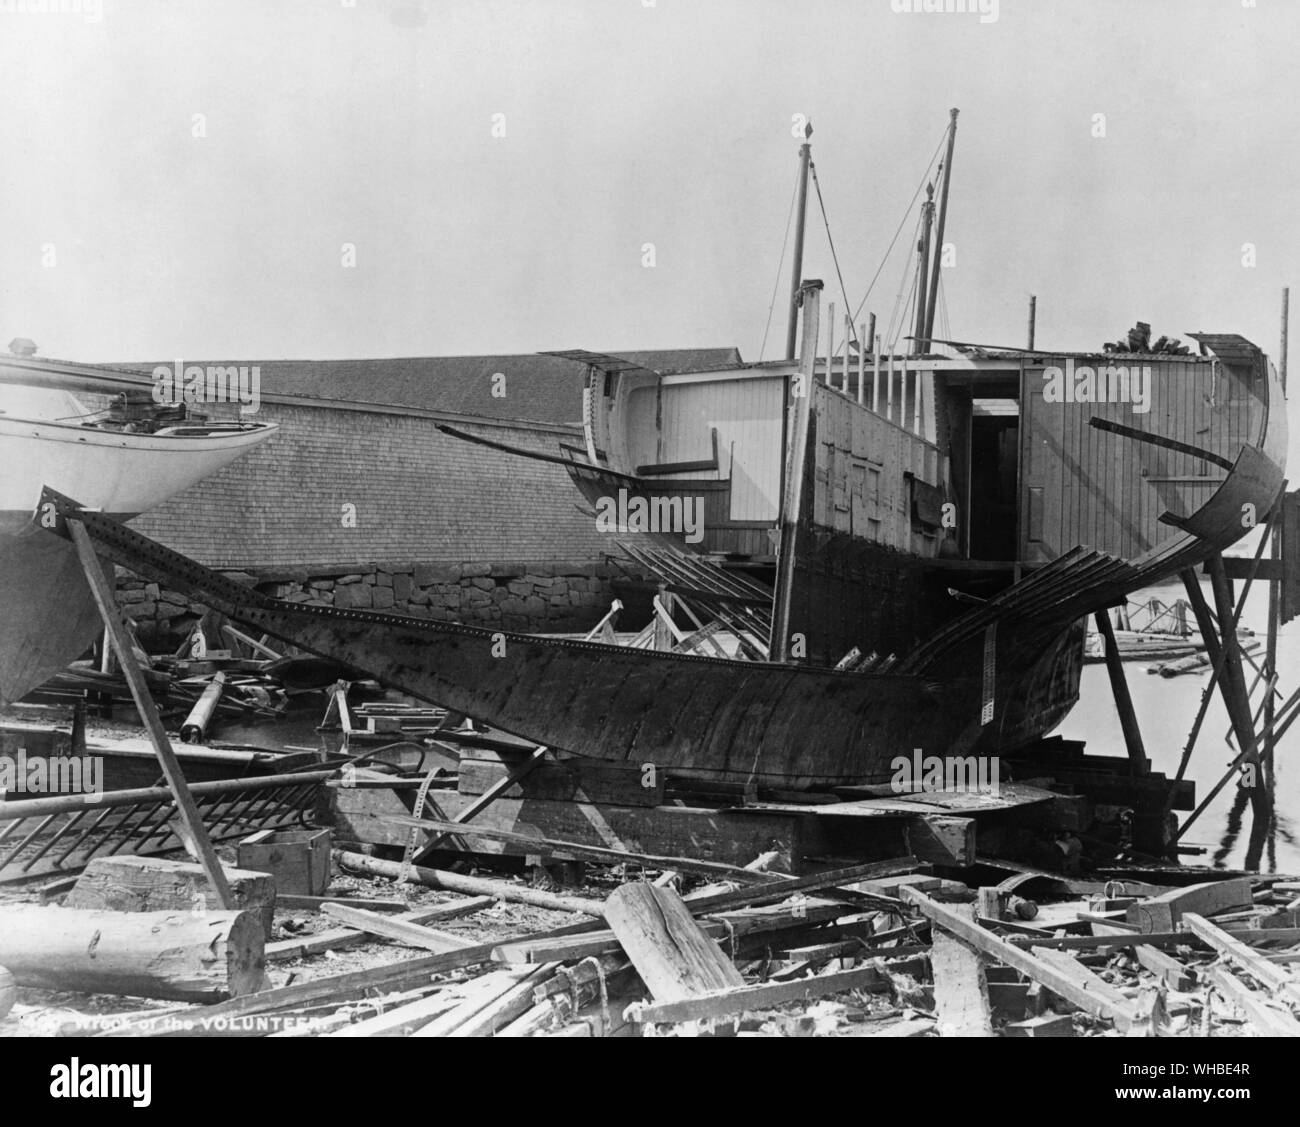 Wreck of the Volunteer. Stock Photo